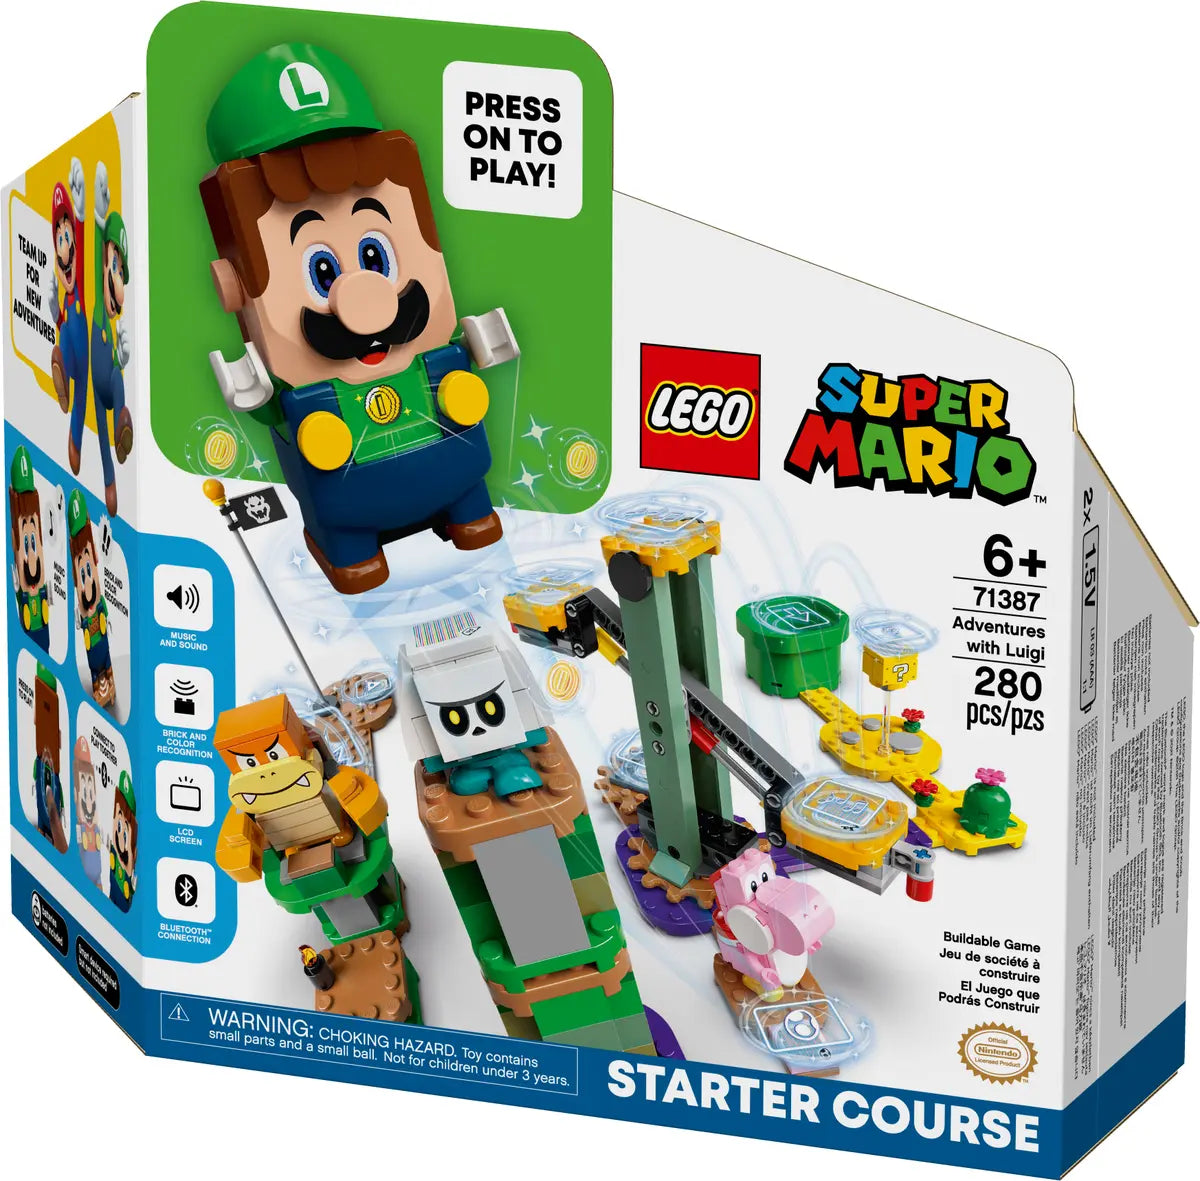 Lego 71387 Super Mario Adventures with Luigi Starter Course req 2 x AAA batteries